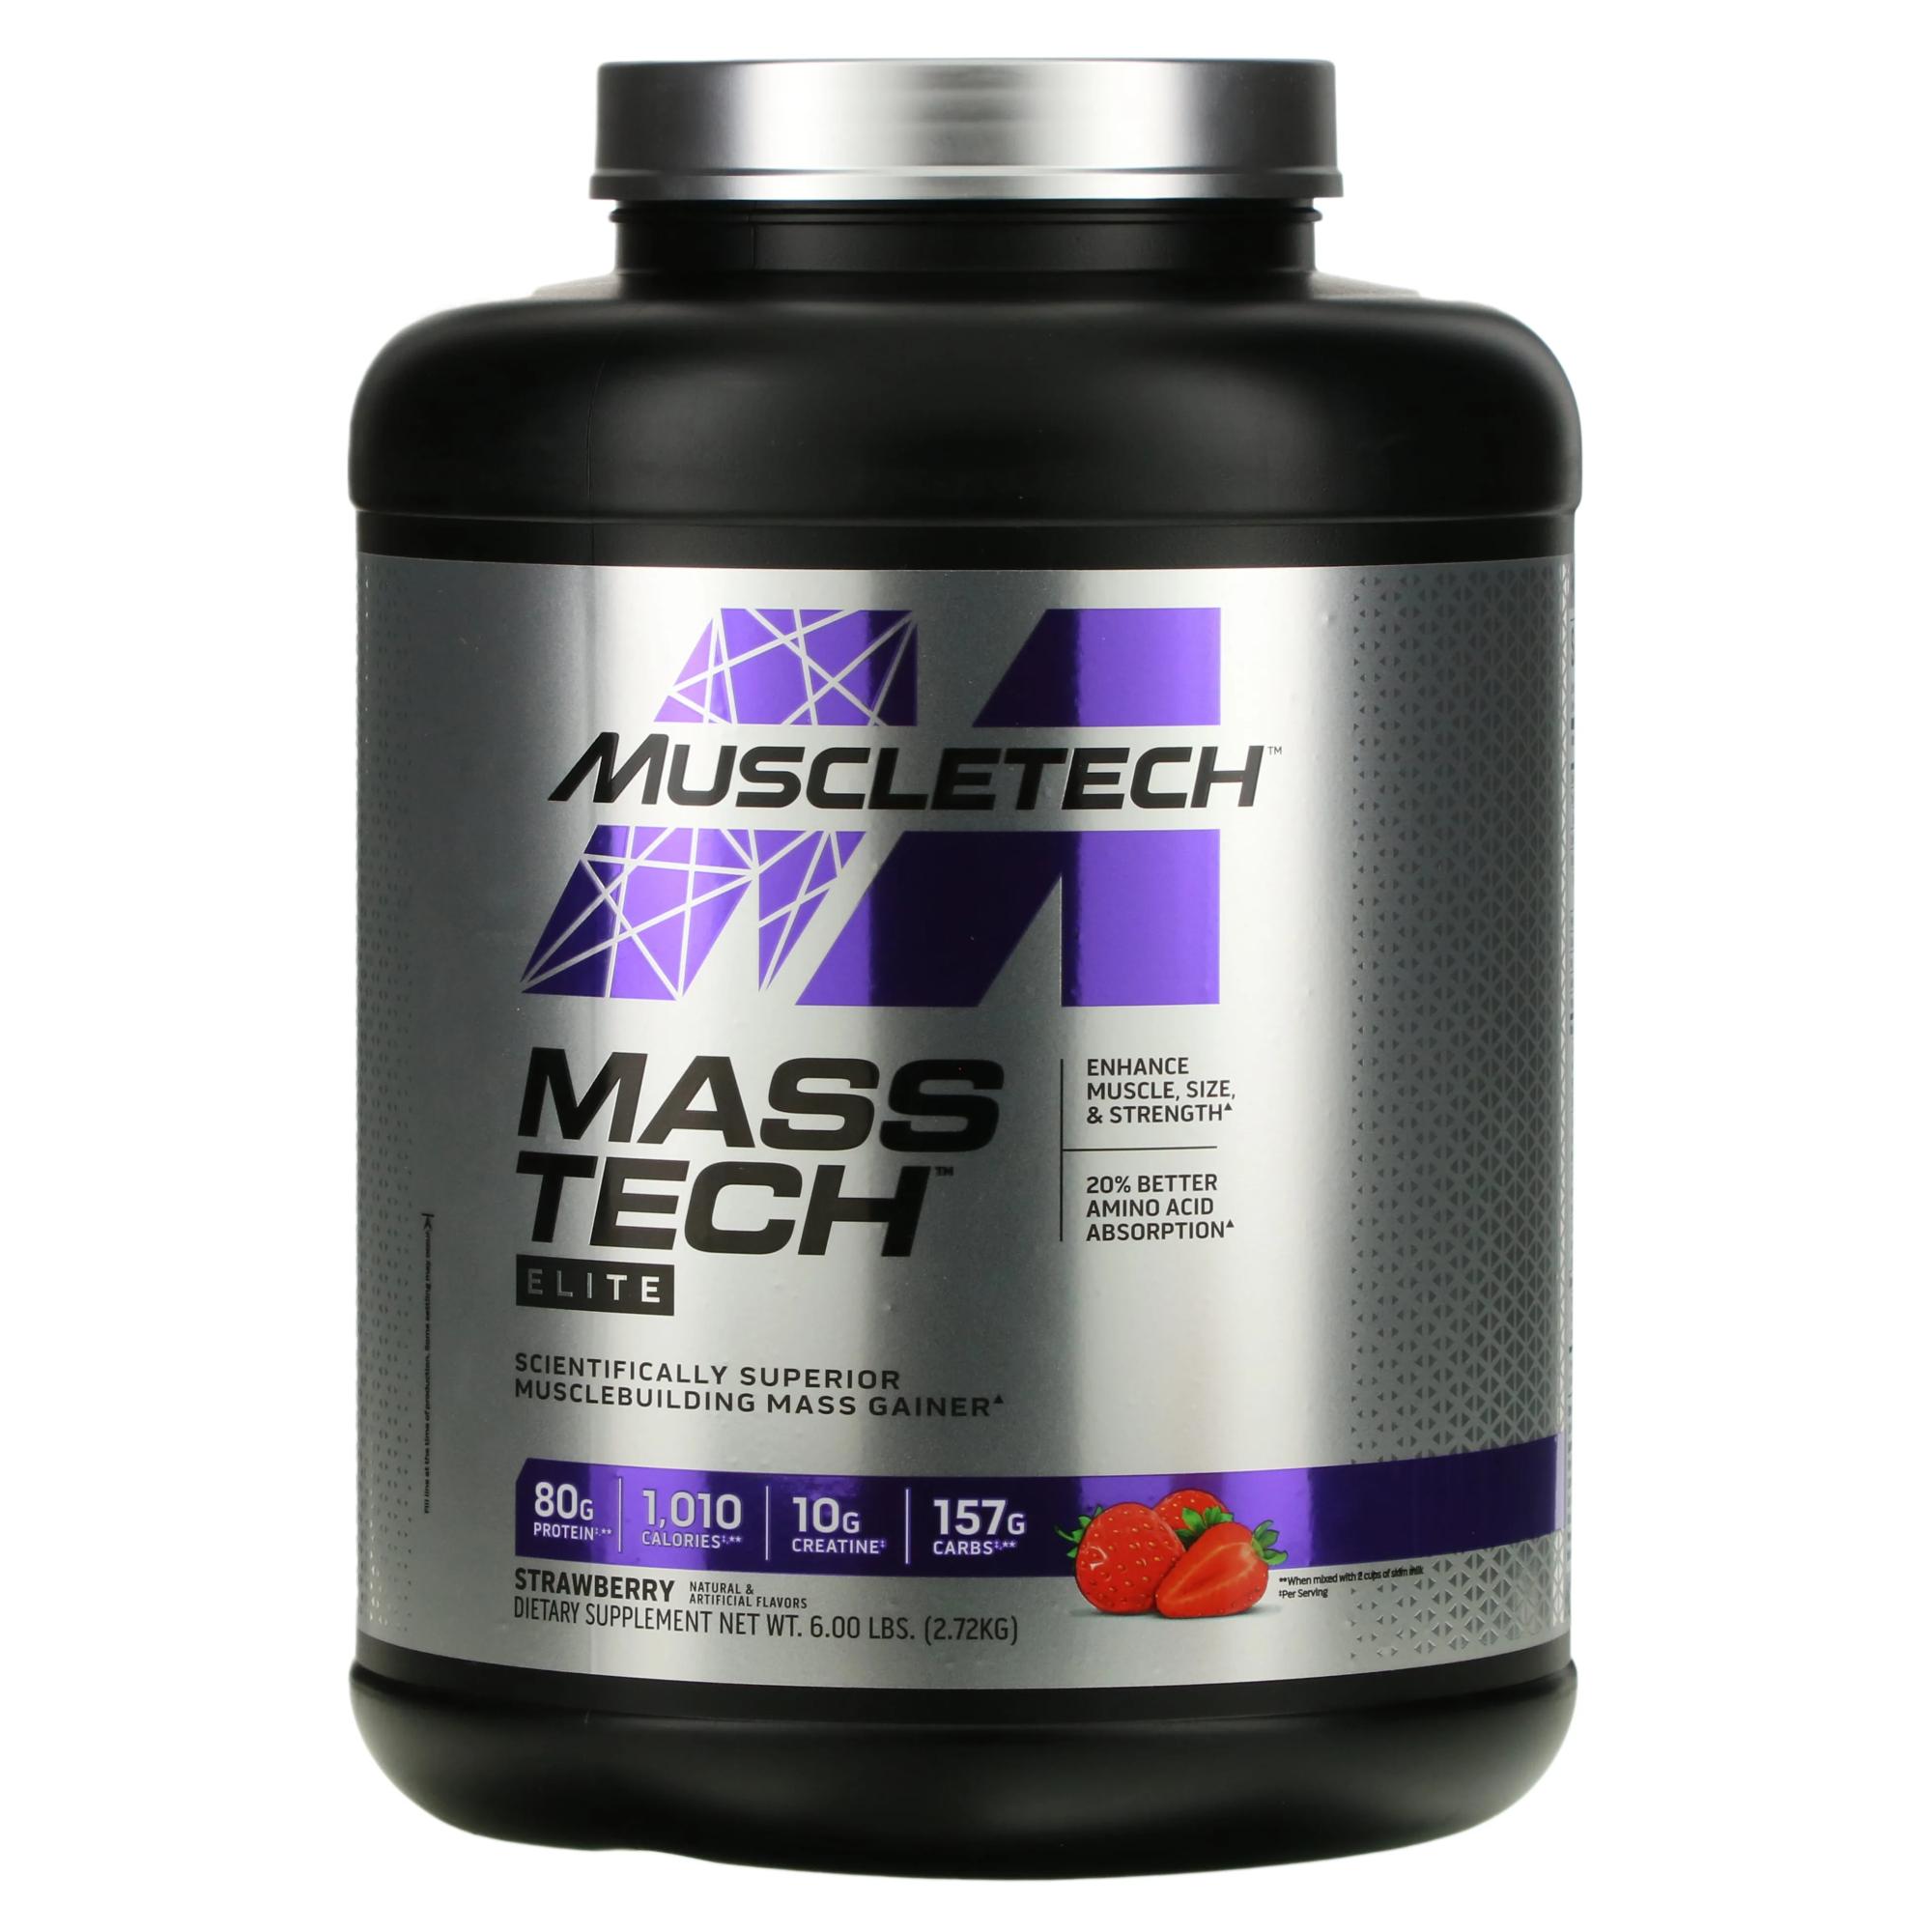 MuscleTech Mass Tech Elite клубника 2,72 кг (6 фунтов) muscletech mass tech elite клубника 2 72 кг 6 фунтов